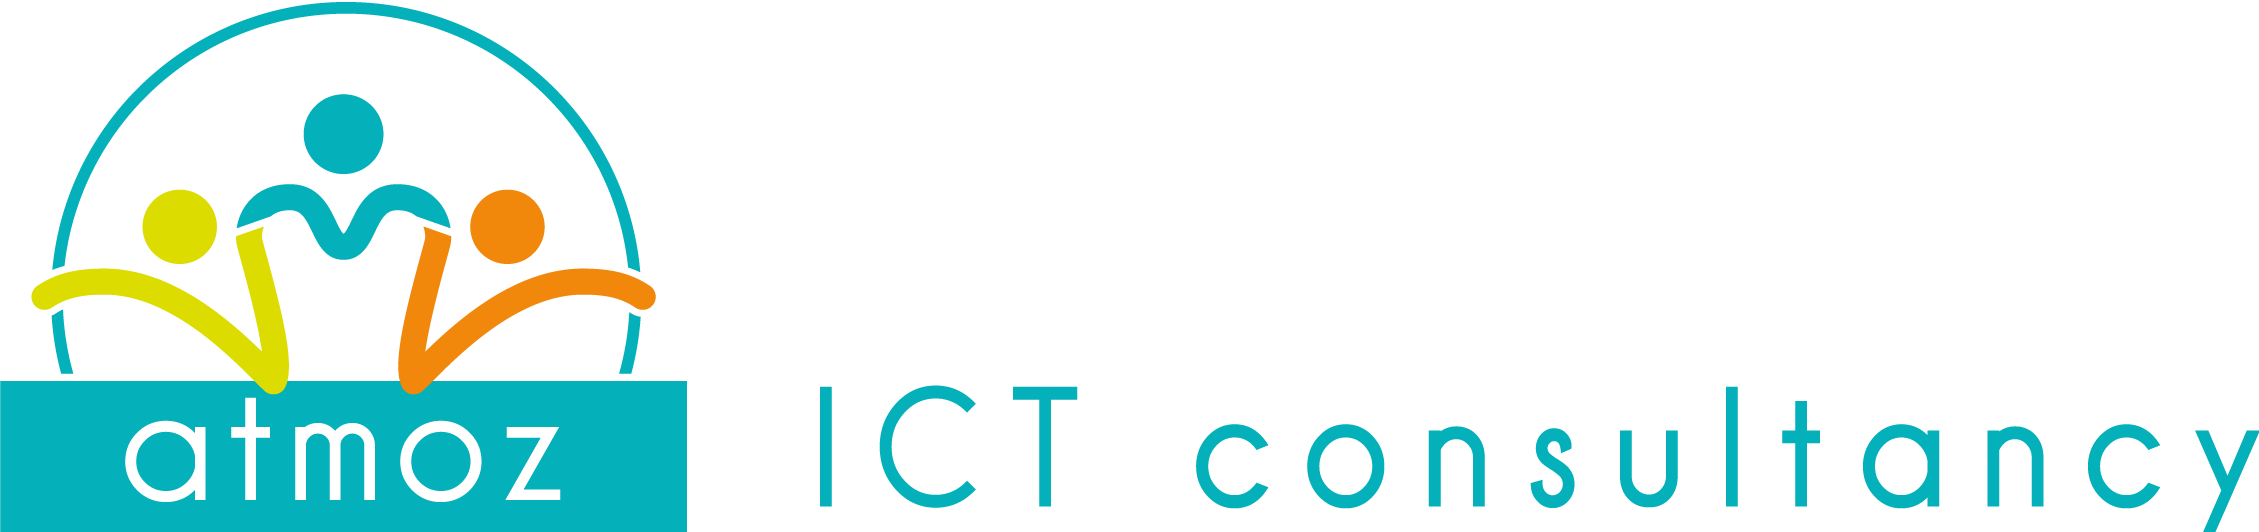 Atmoz ICT Consultancy Logo